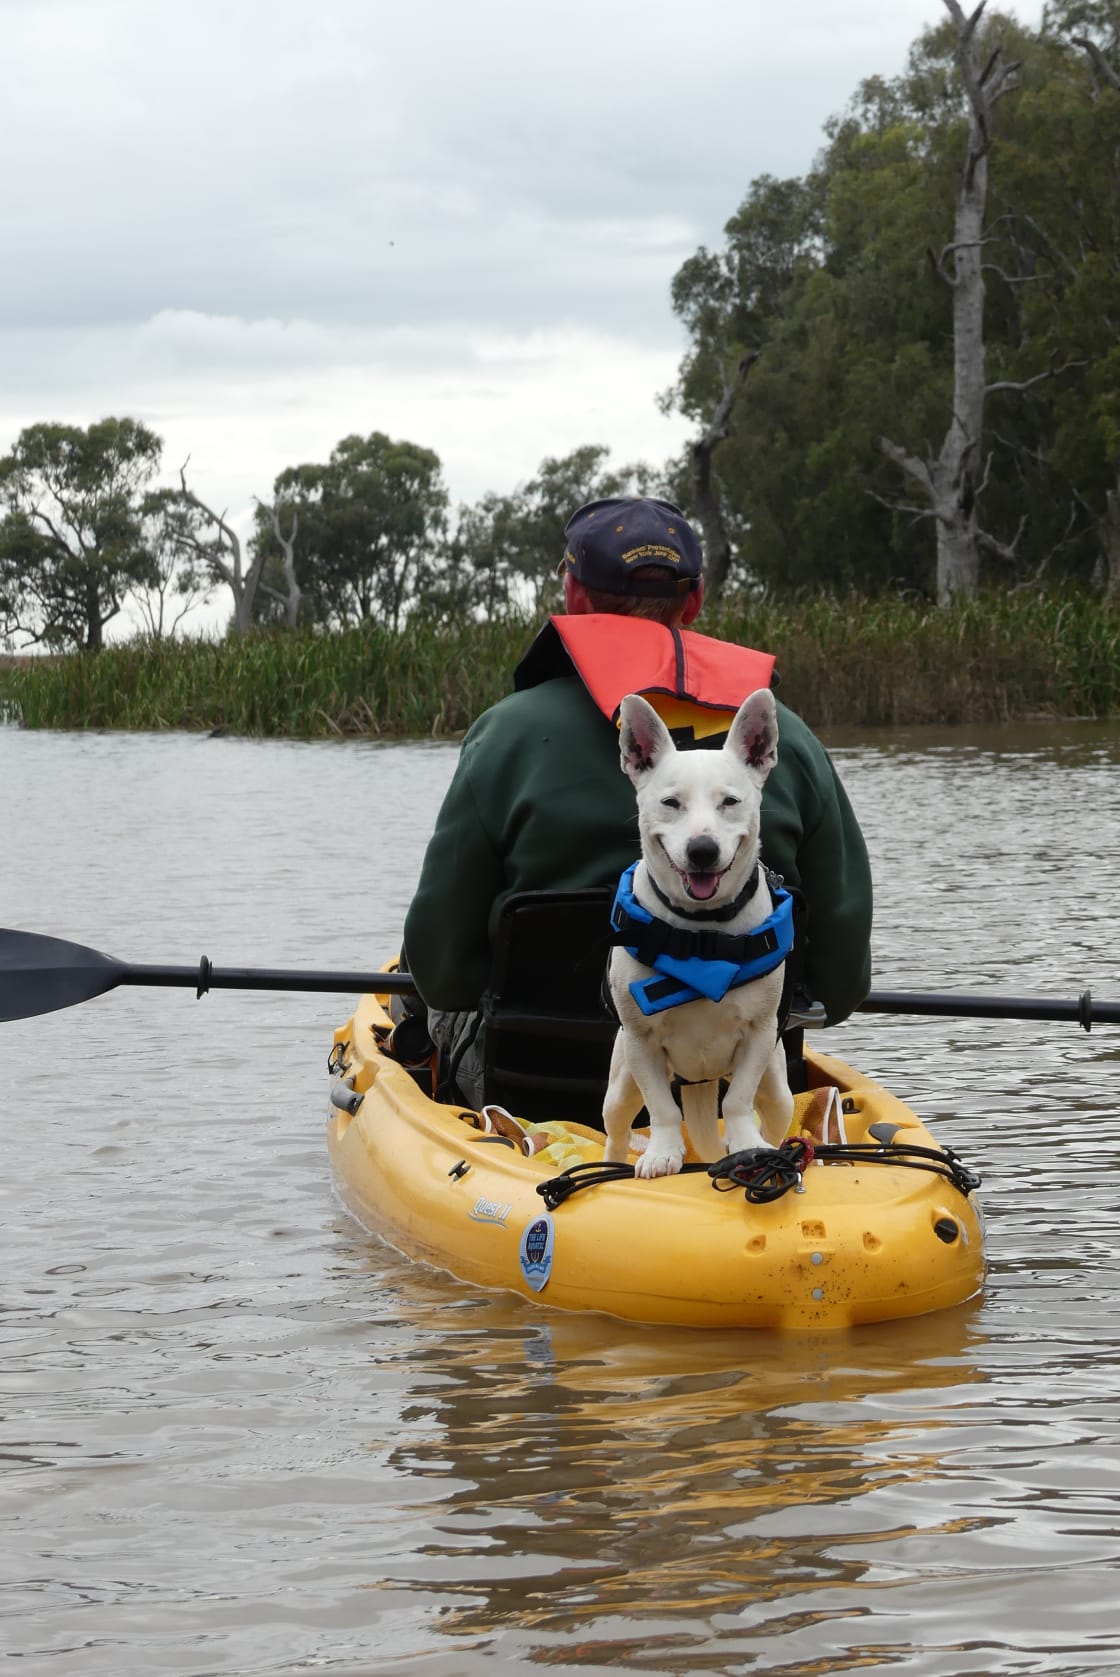 Kayaking - campsite is pet friendly